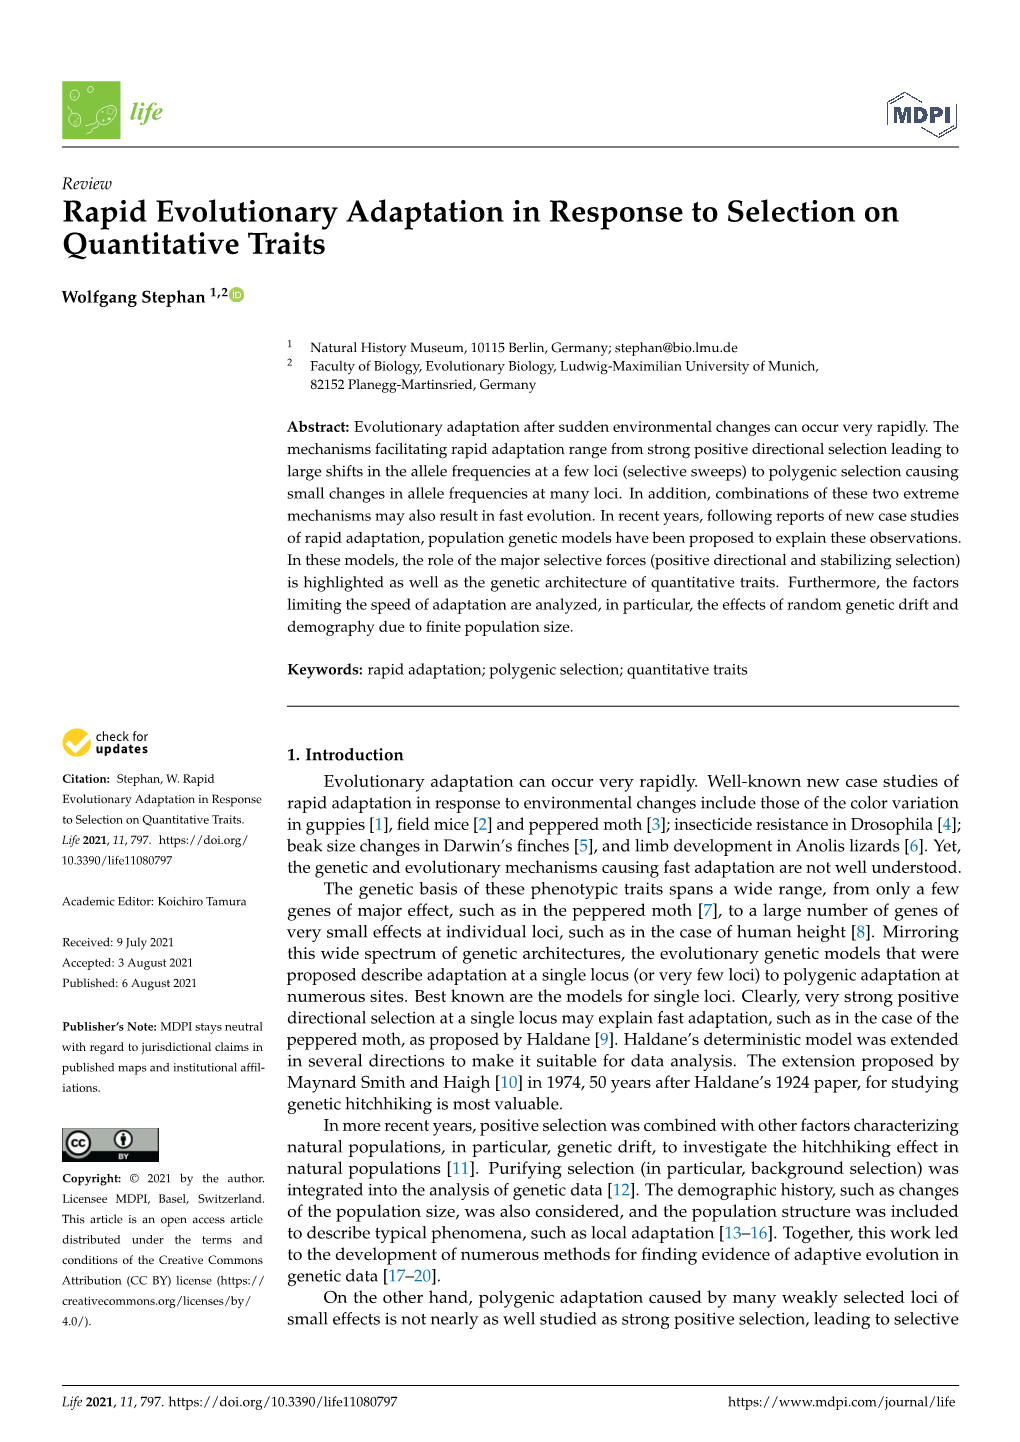 Rapid Evolutionary Adaptation in Response to Selection on Quantitative Traits